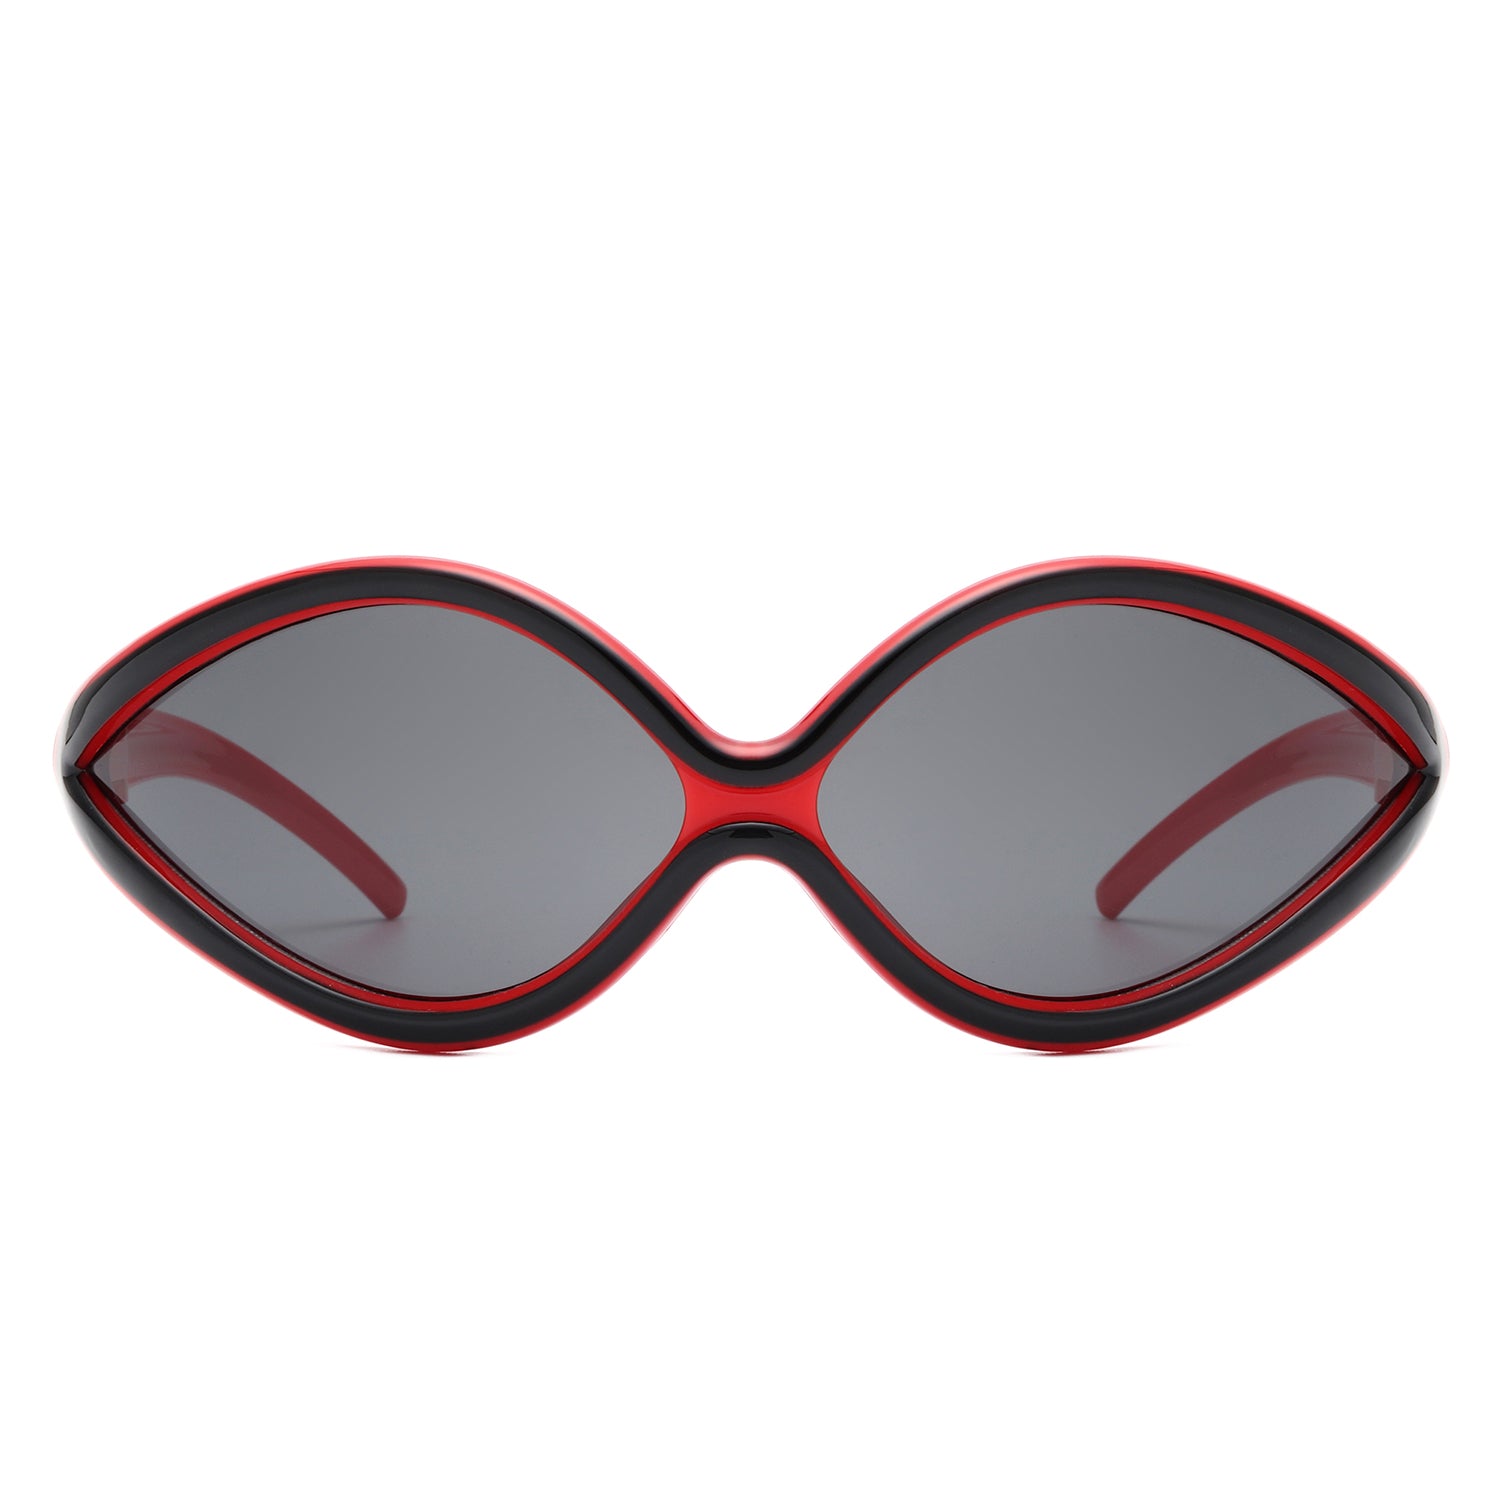 HS1274 - Oversize Oval Fashion Wrap Around Cat Eye Wholesale Sunglasses